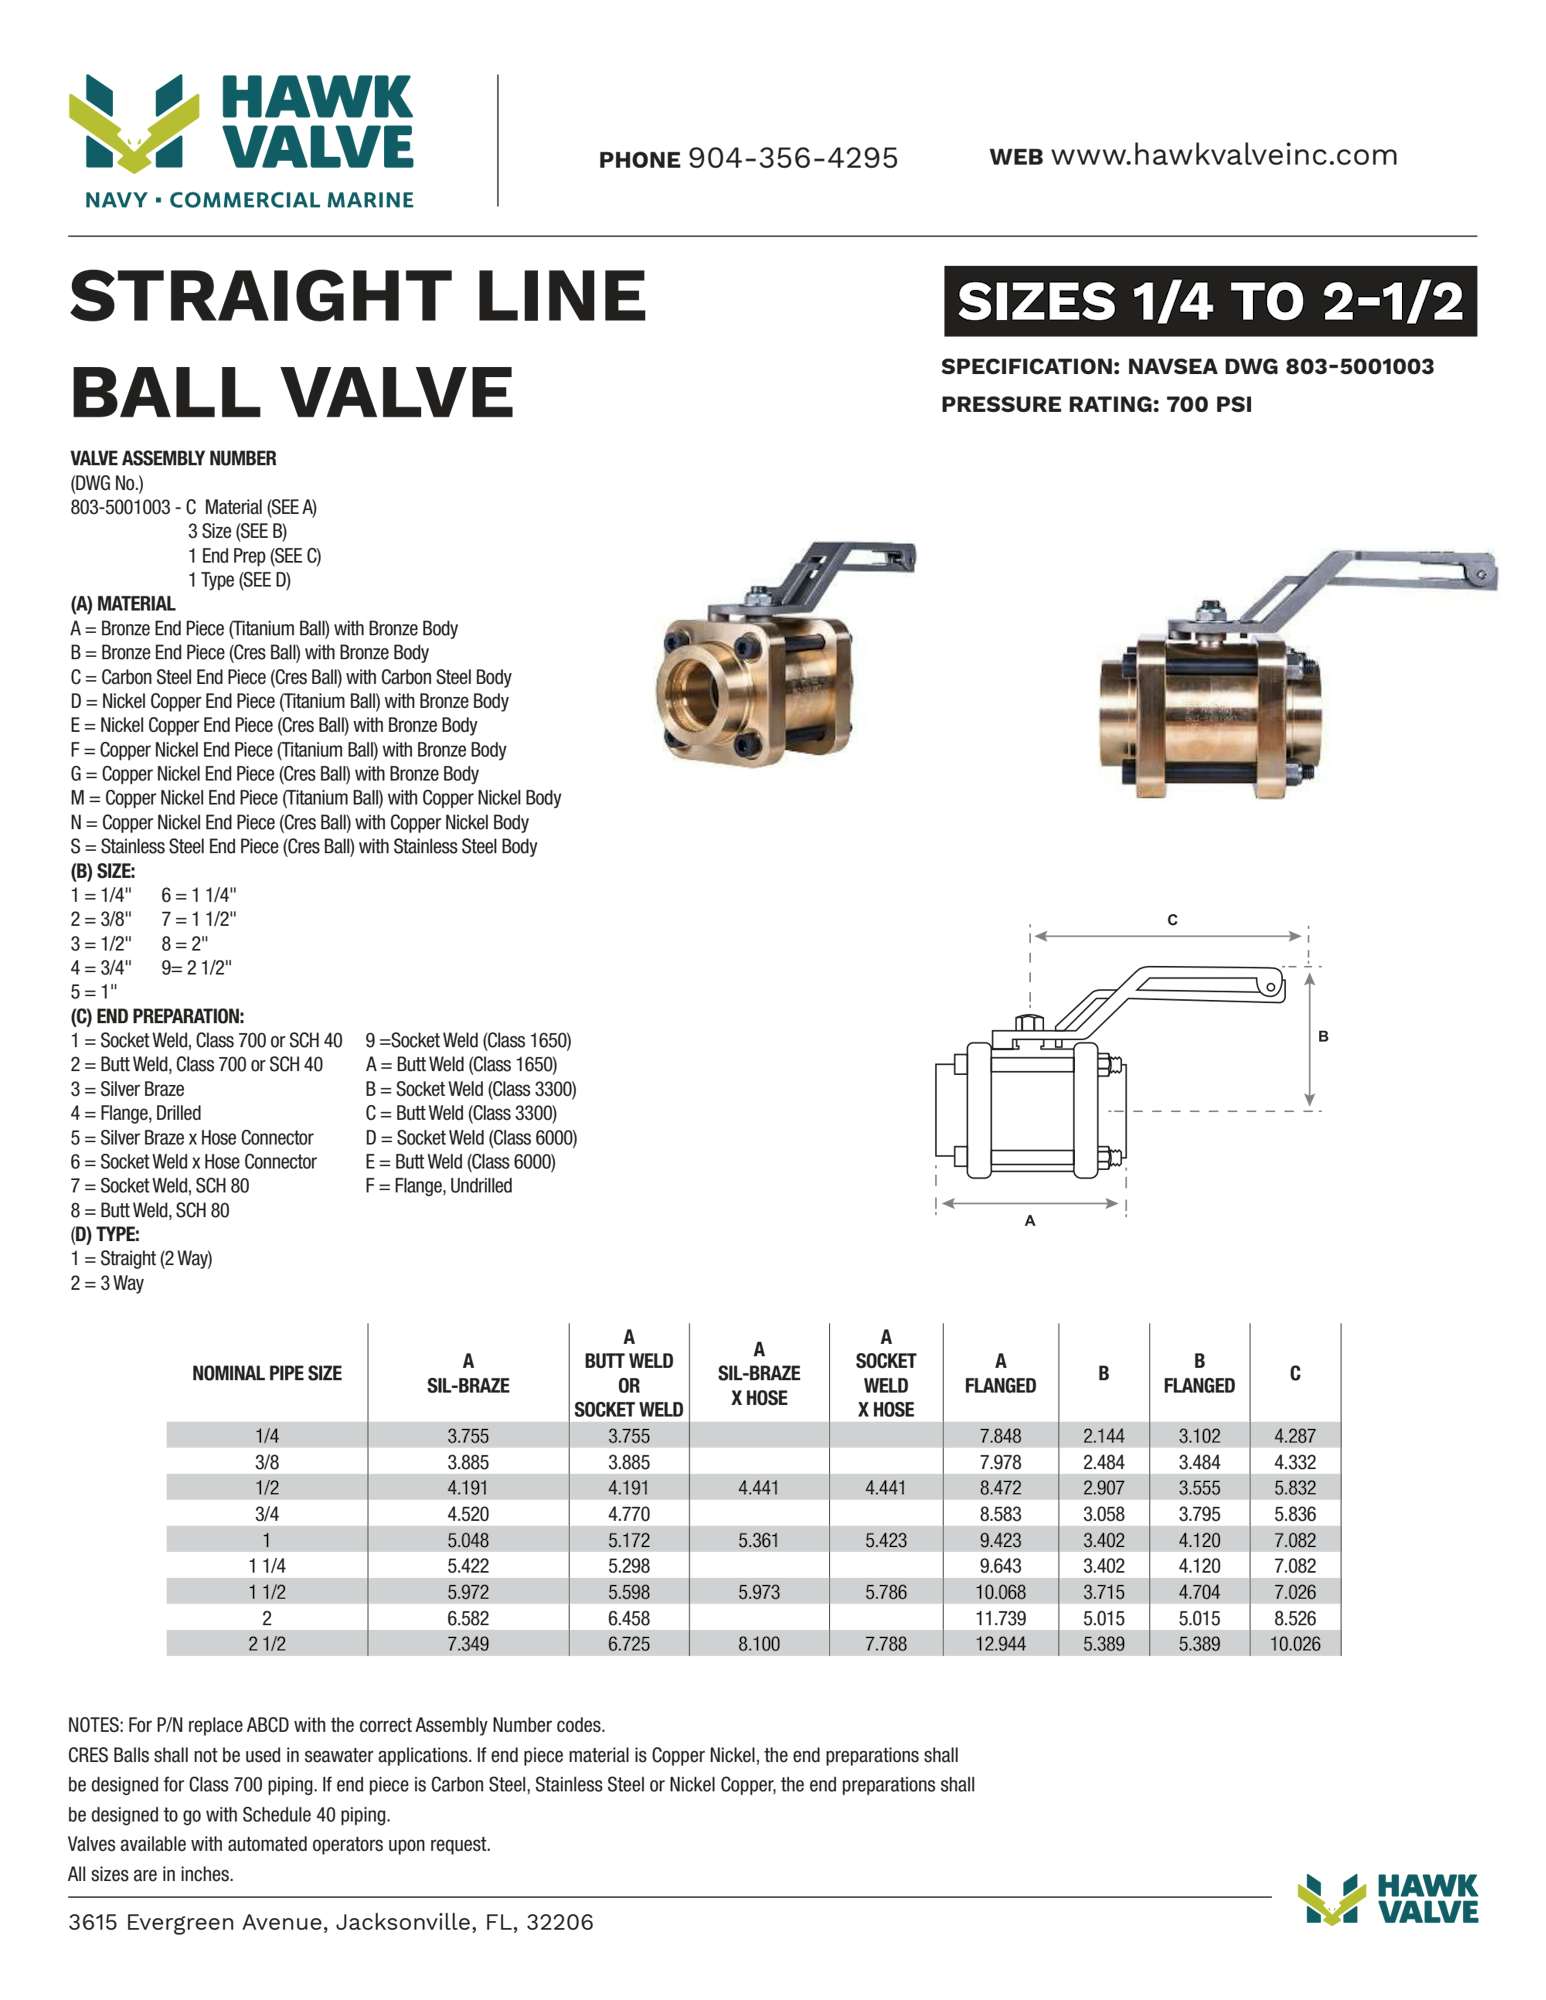 ball-valve-straight-line-1_4-2-1_2.pdf